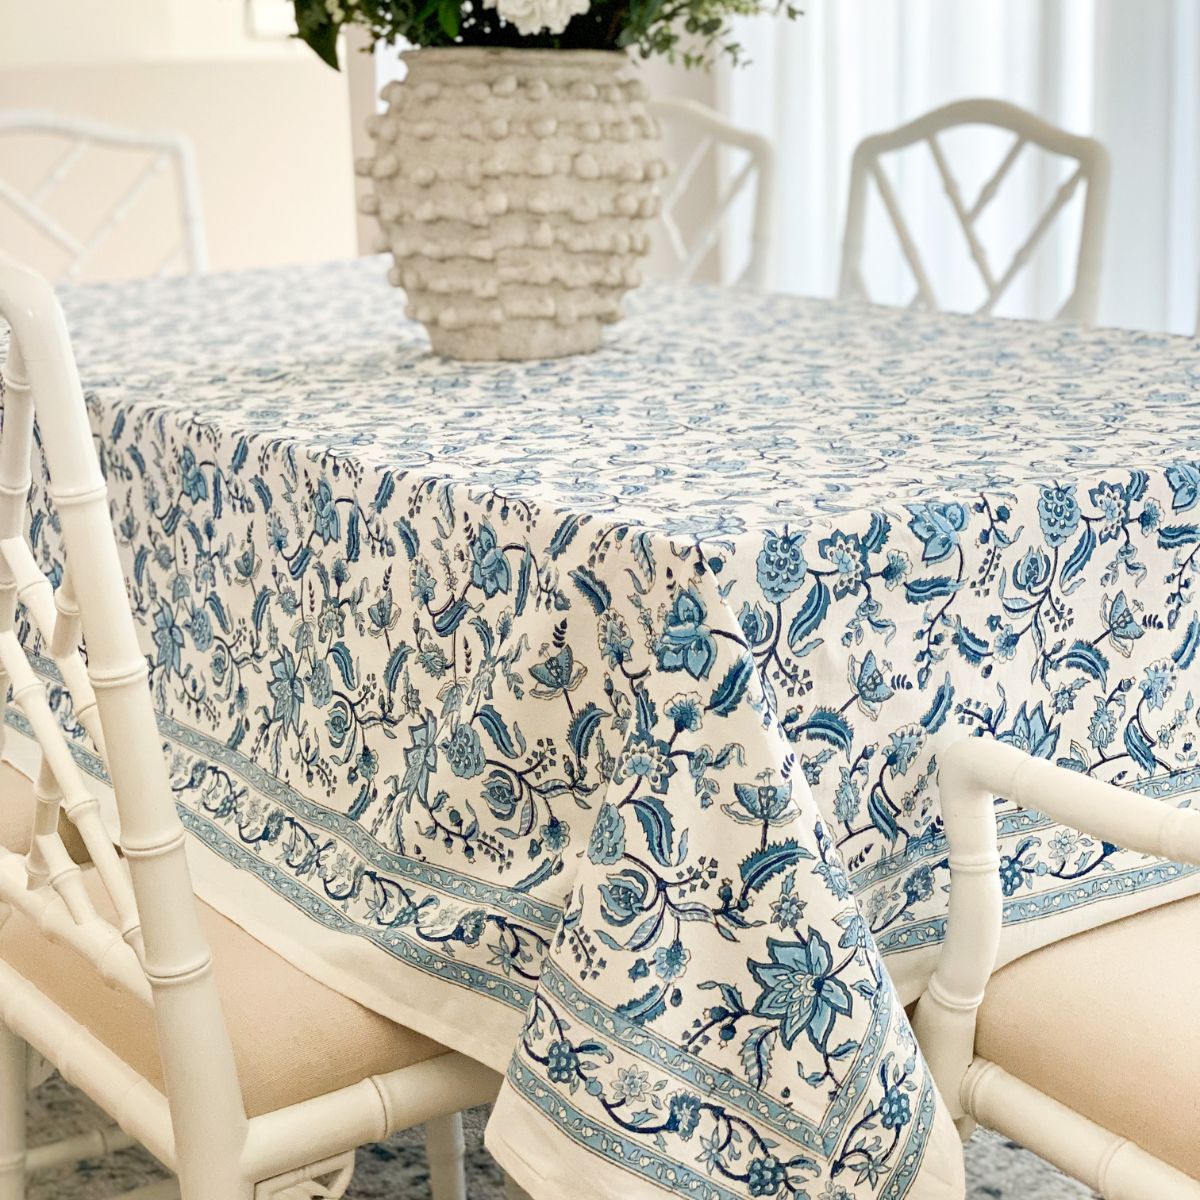 Sample Chintz Blue tablecloth 150x220 cm ©